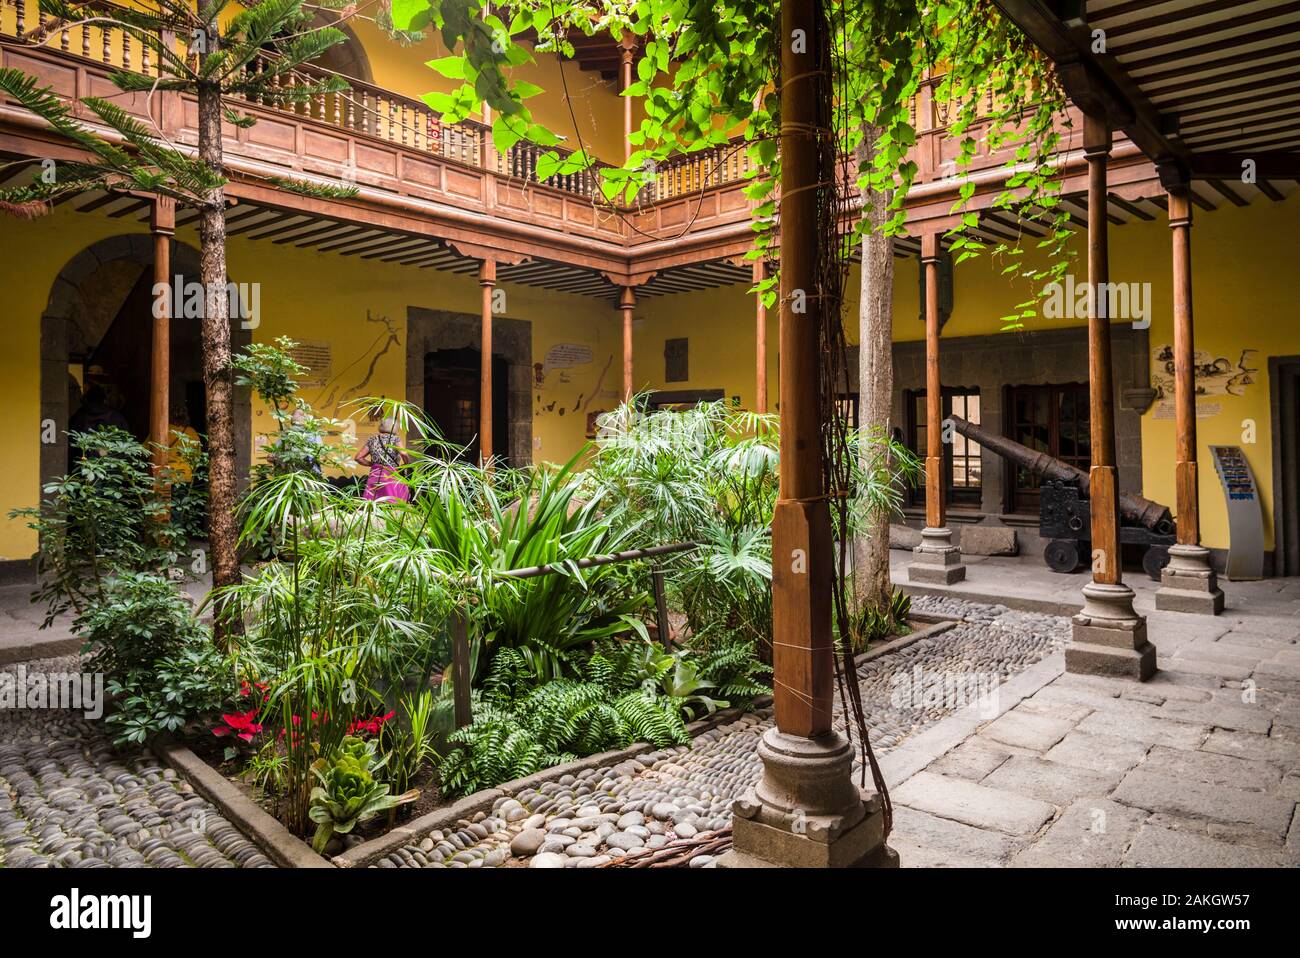 Spain, Canary Islands, Gran Canaria Island, Las Palmas de Gran Canaria, Casa Museo de Colon, courtyard Stock Photo